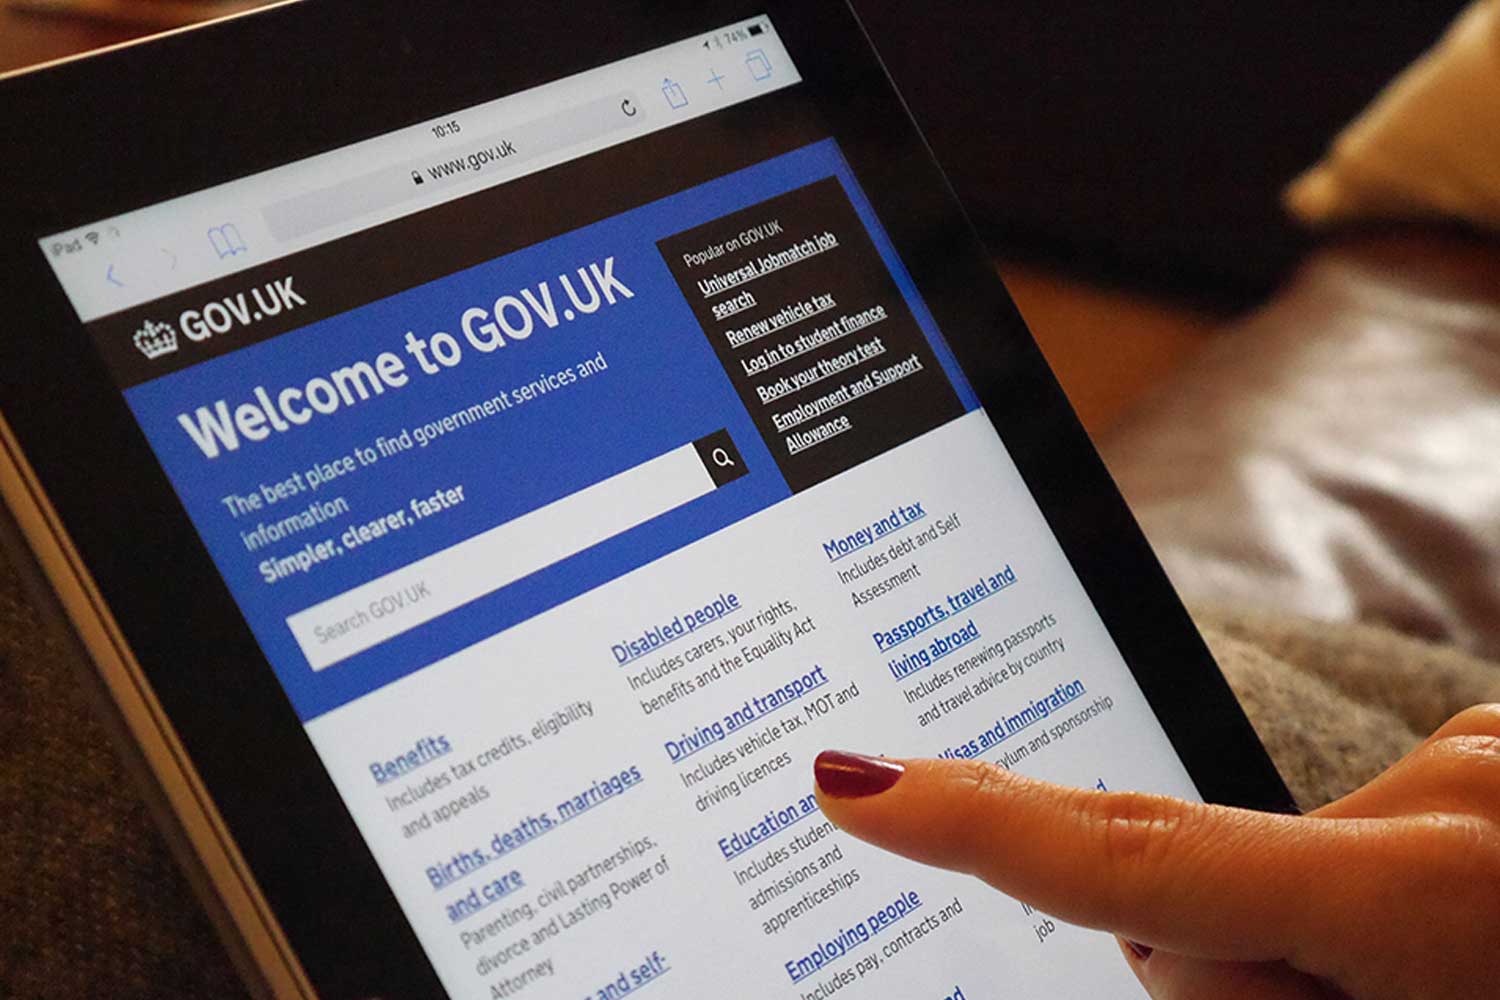 Photo showing GOV.UK homepage on an iPad